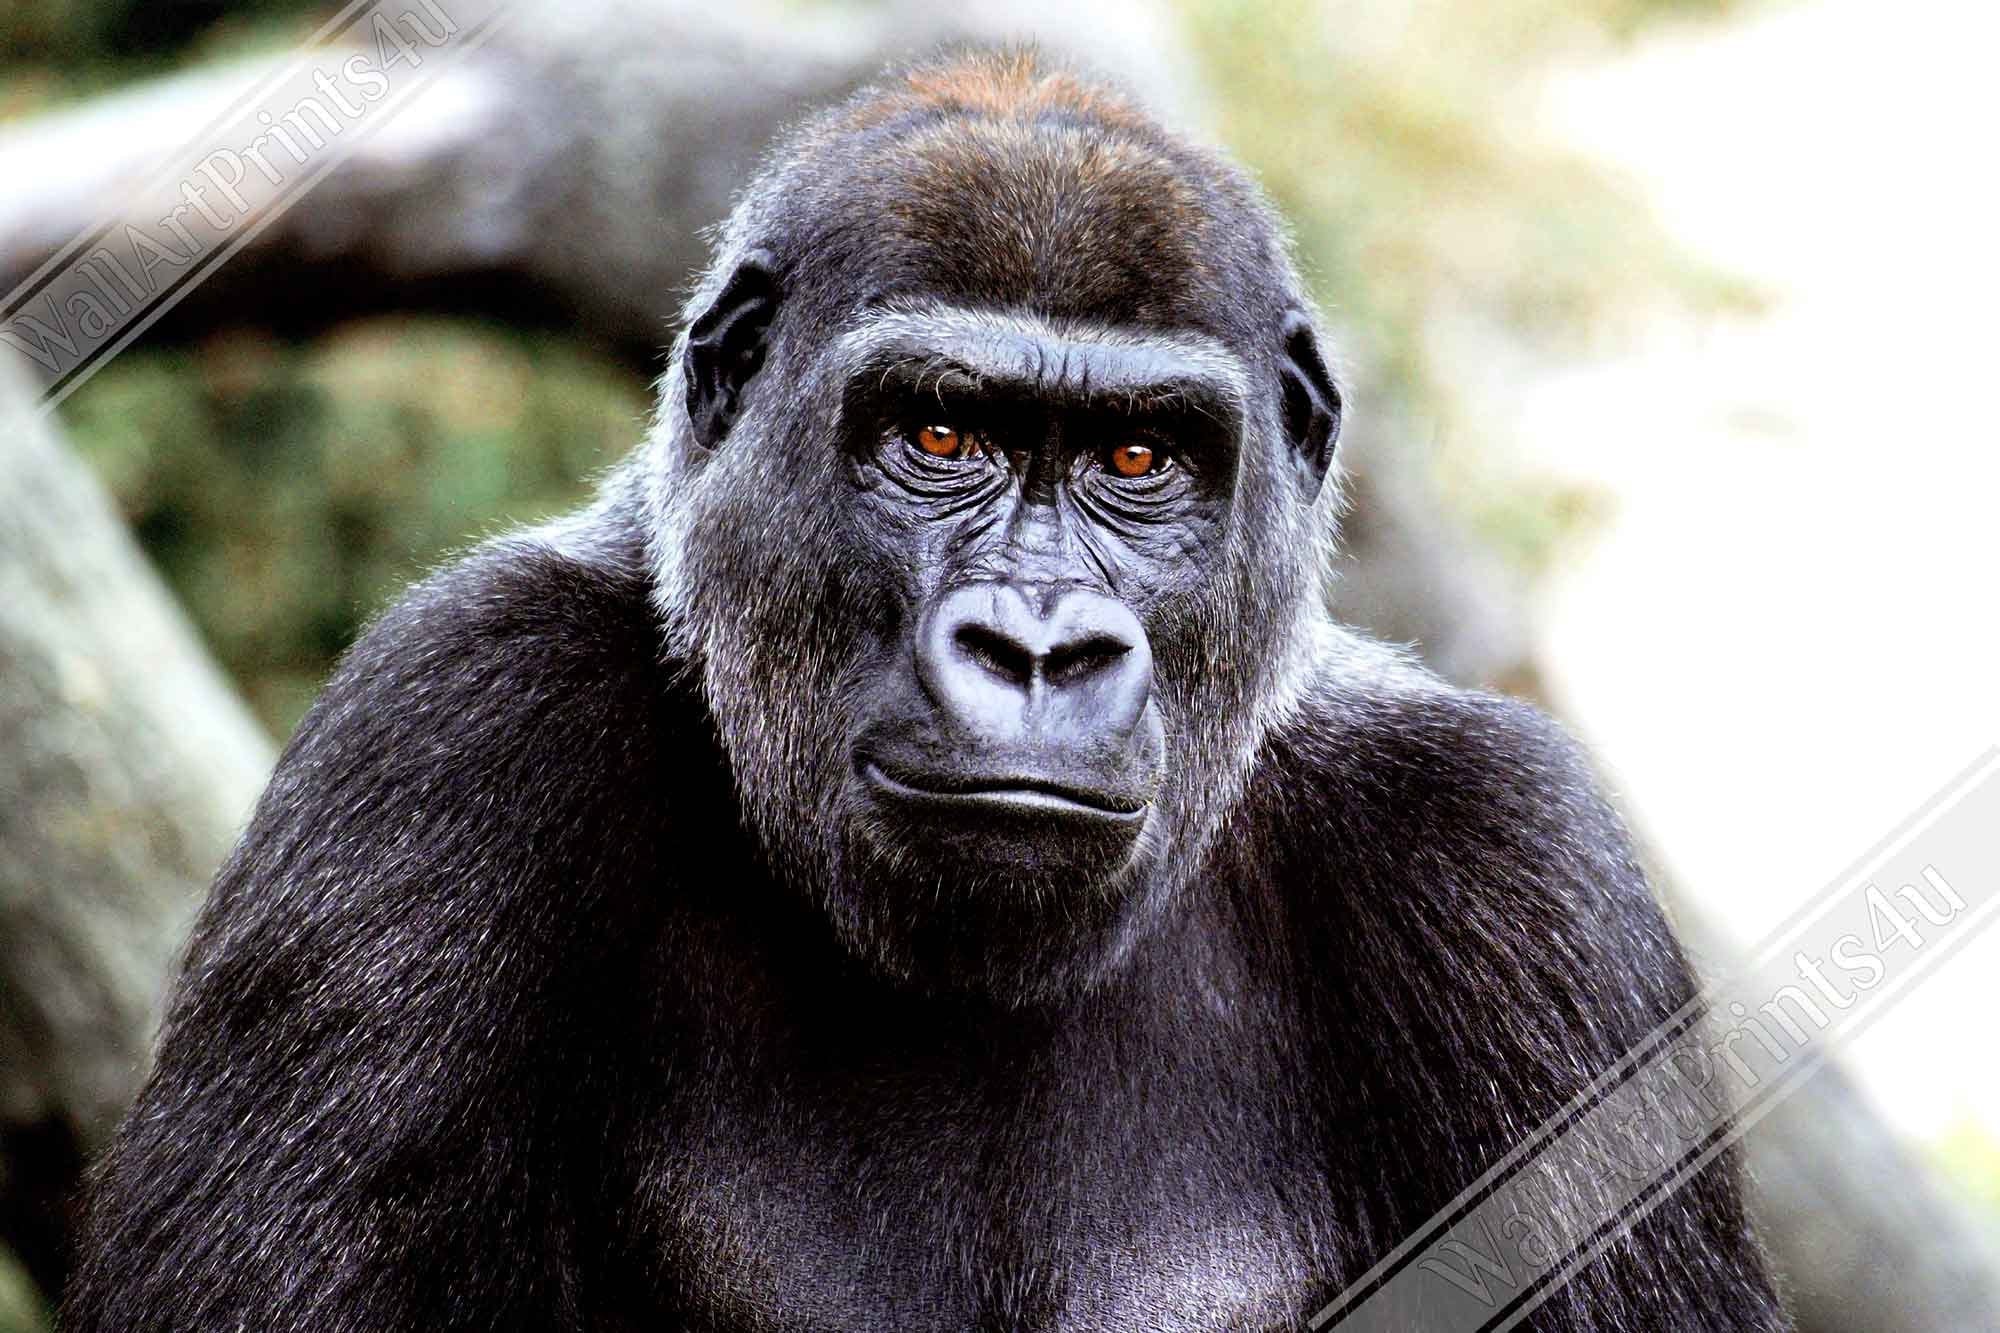 Gorilla Framed Print , Handsome Gorilla Smithsonian National Zoo 2002 - WallArtPrints4U